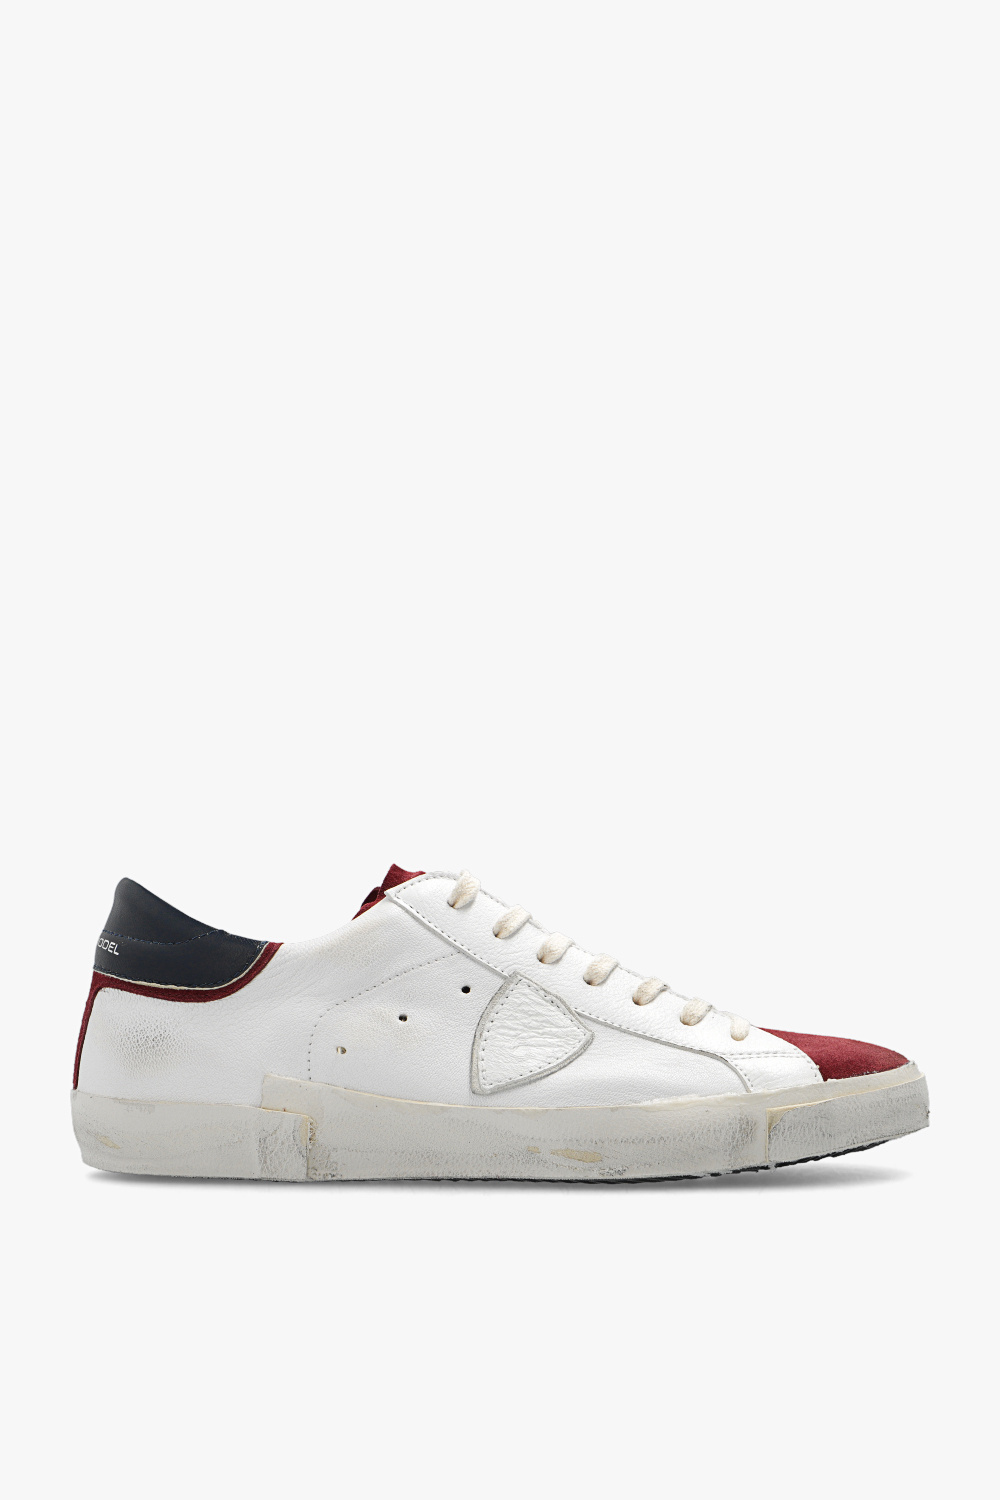 Philippe Model ‘PRSX’ sneakers | Men's Shoes | Vitkac